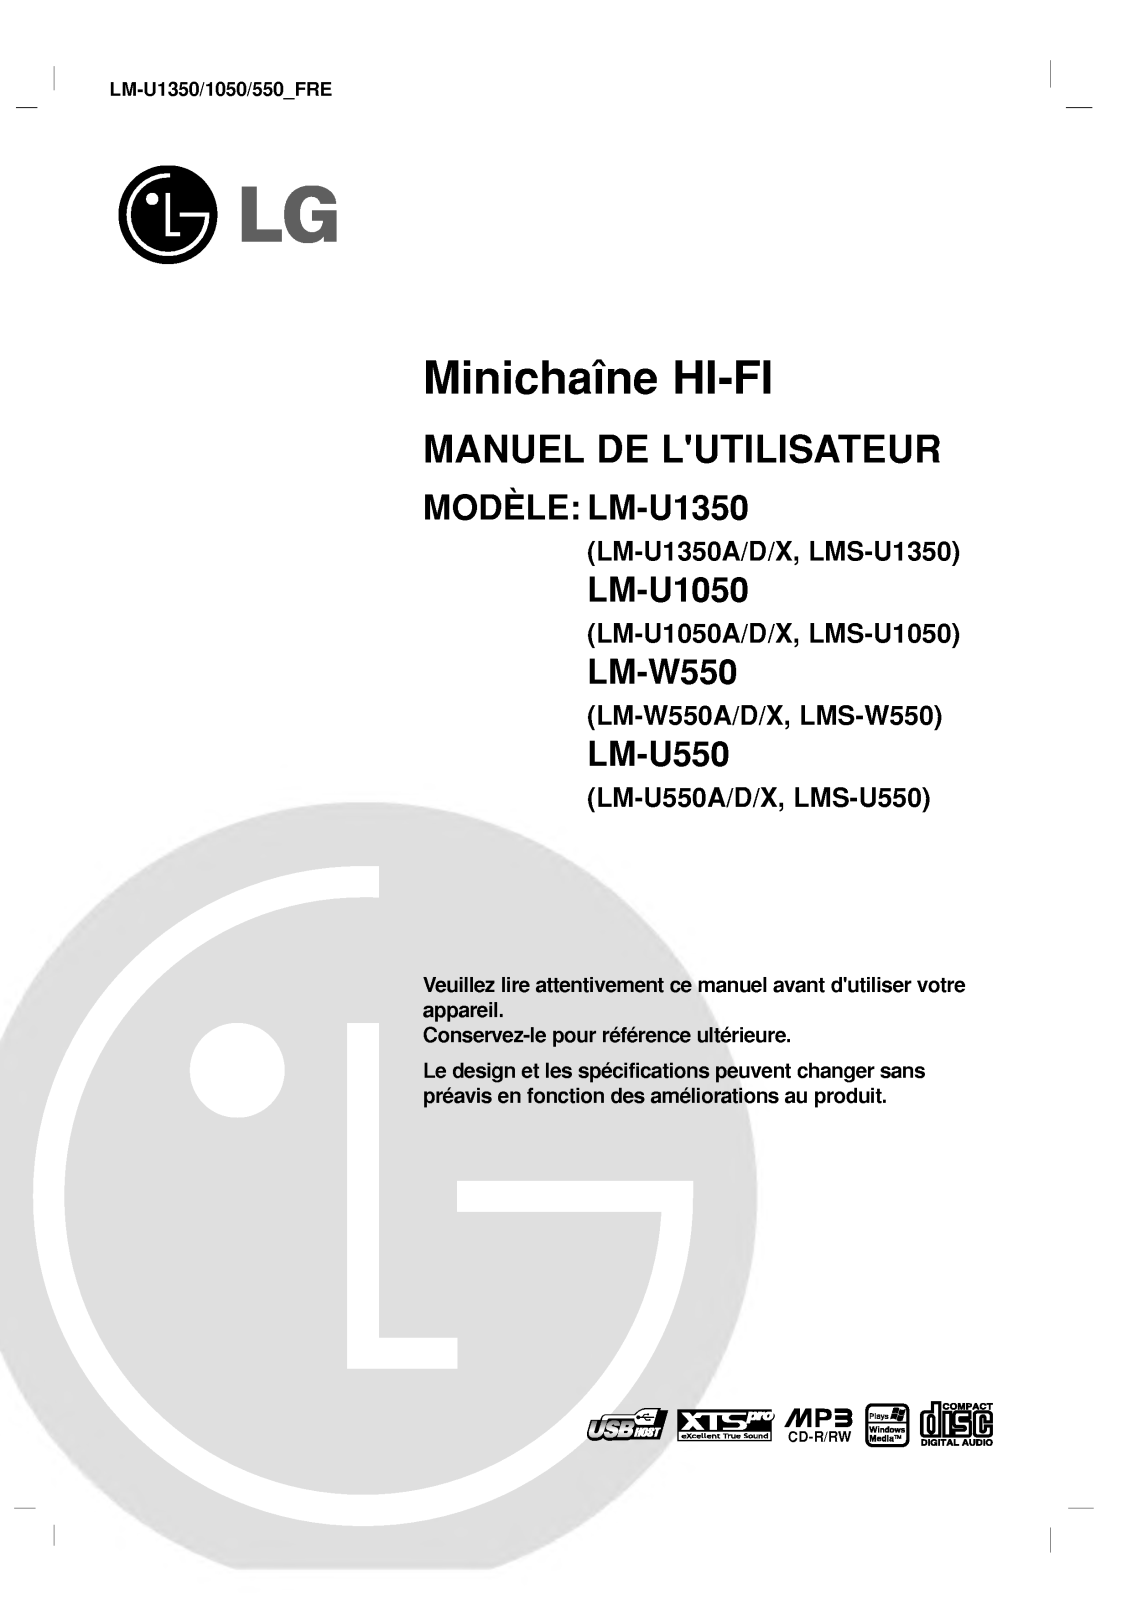 LG LM-U1350 User Manual